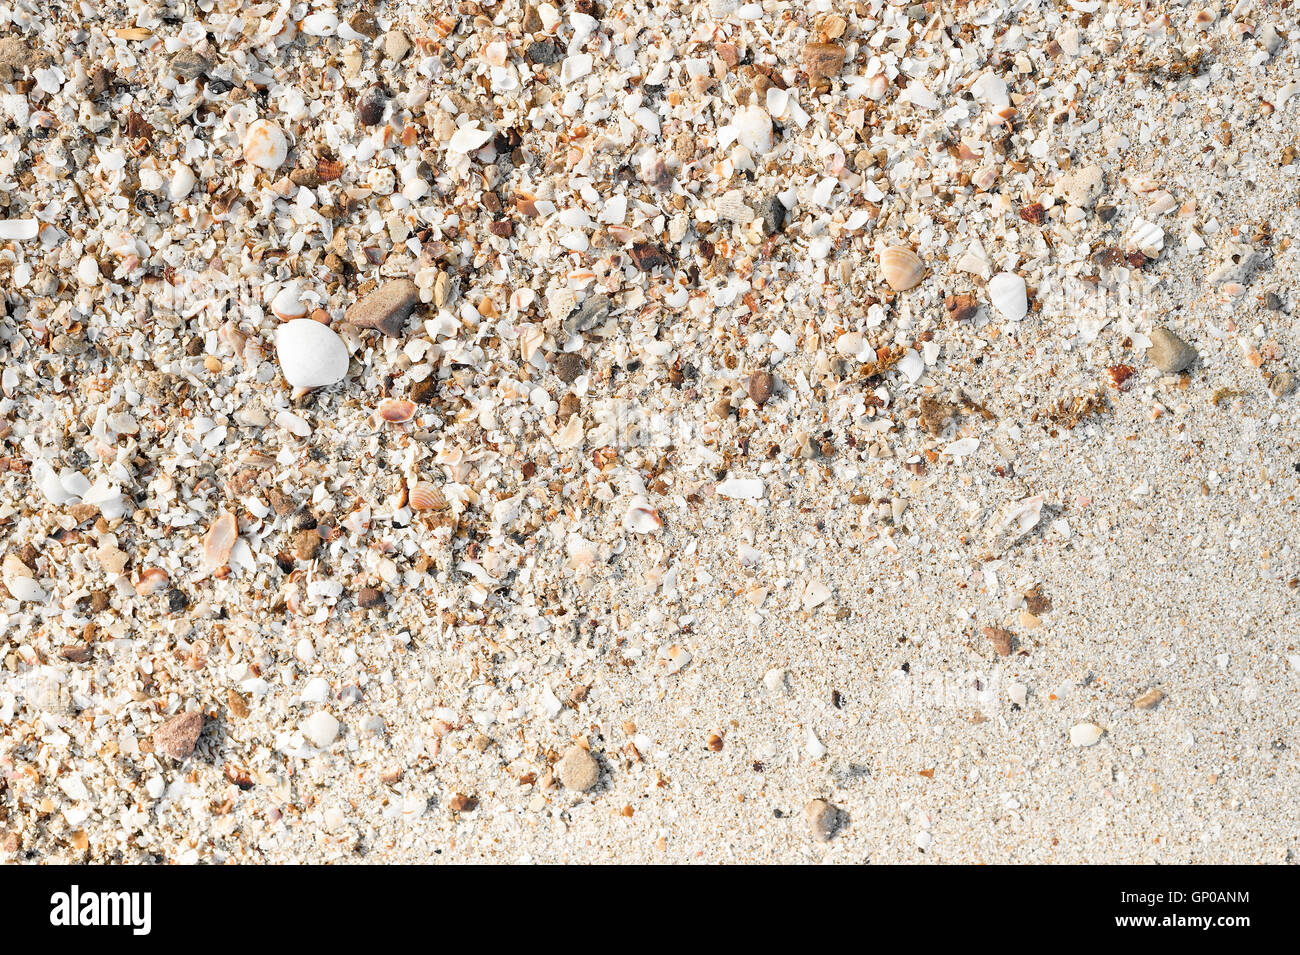 Seashell fragments on sand Stock Photo